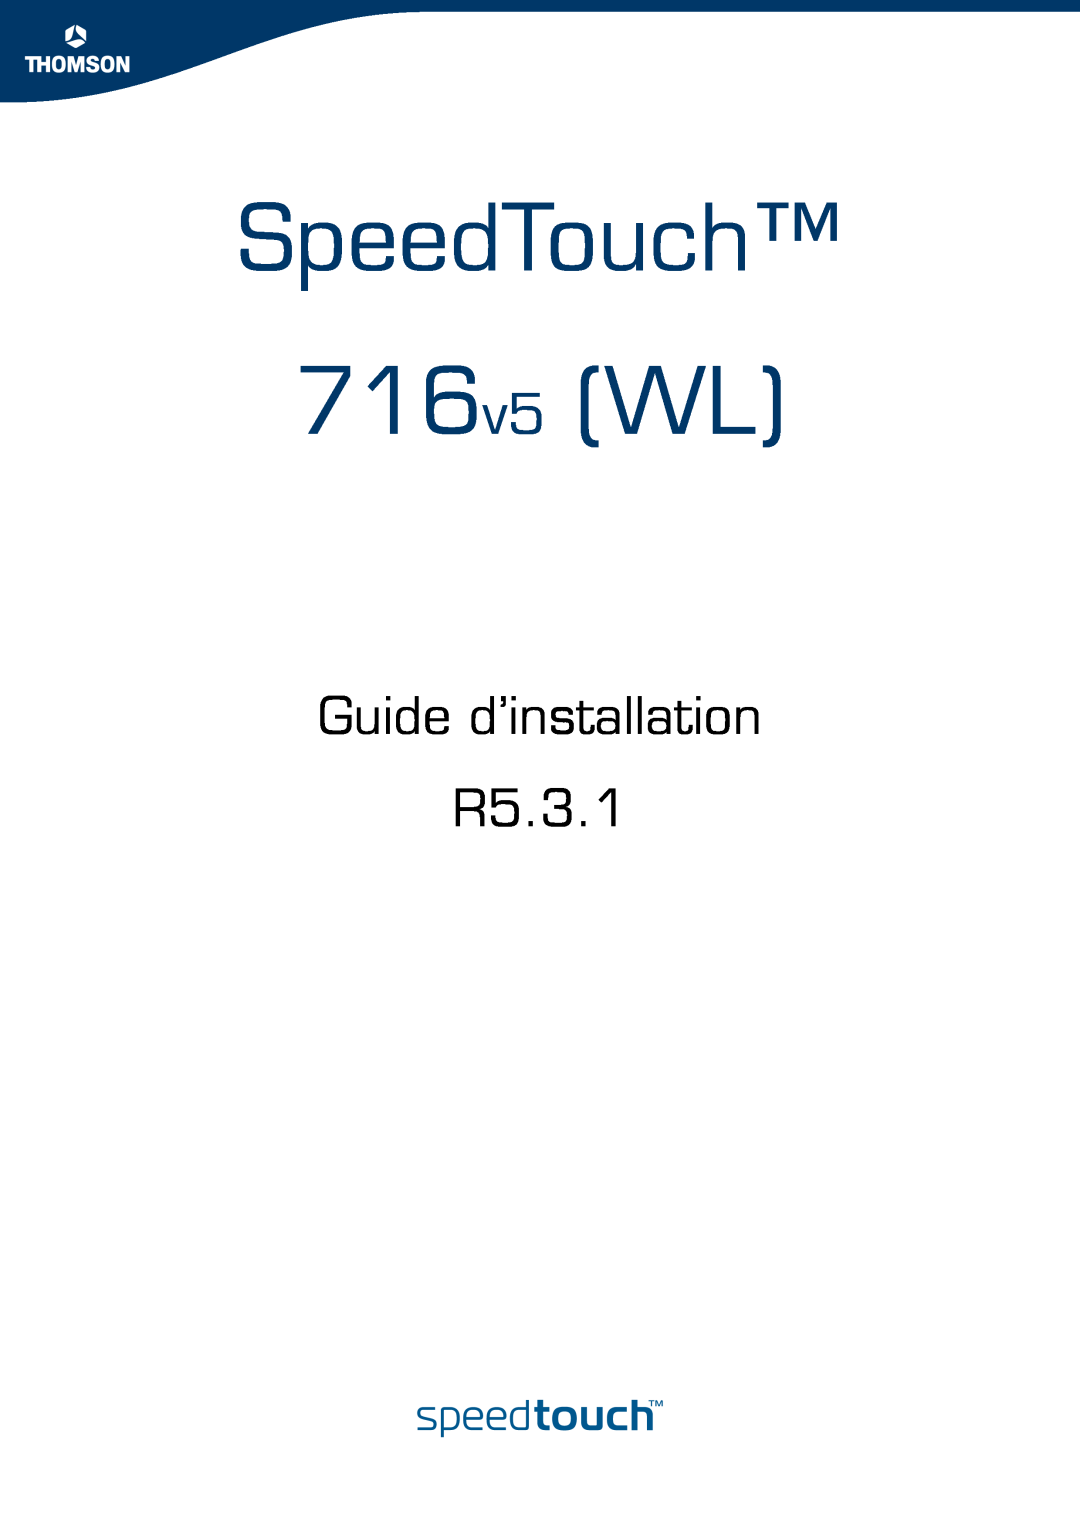 Technicolor - Thomson 716V5 (WL) manual SpeedTouch, 716v5 WL, Guide d’installation R5.3.1 